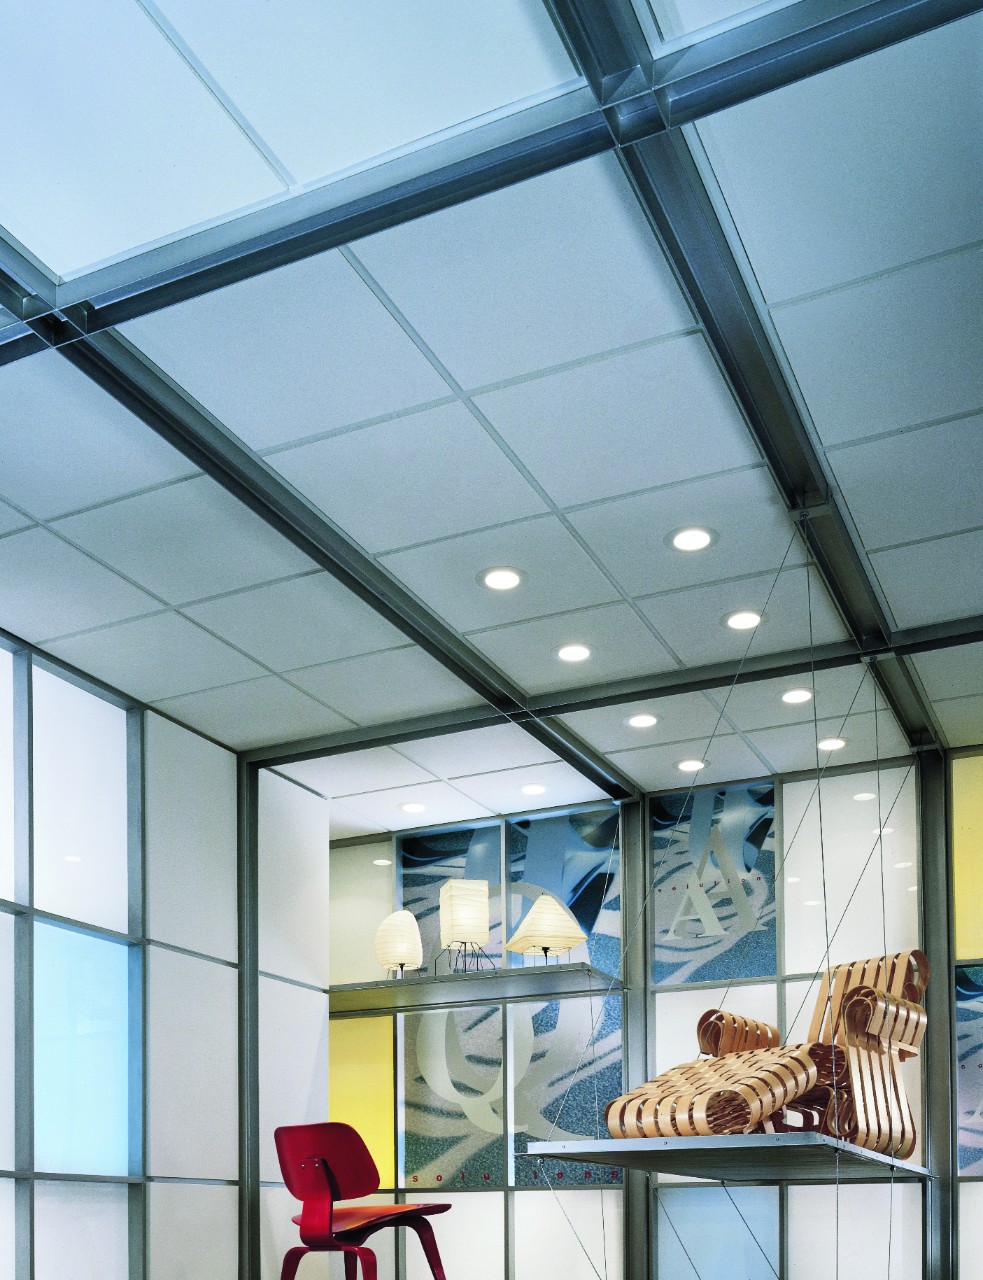 USG Mars™ High-NRC/High-CAC acoustical ceiling tiles